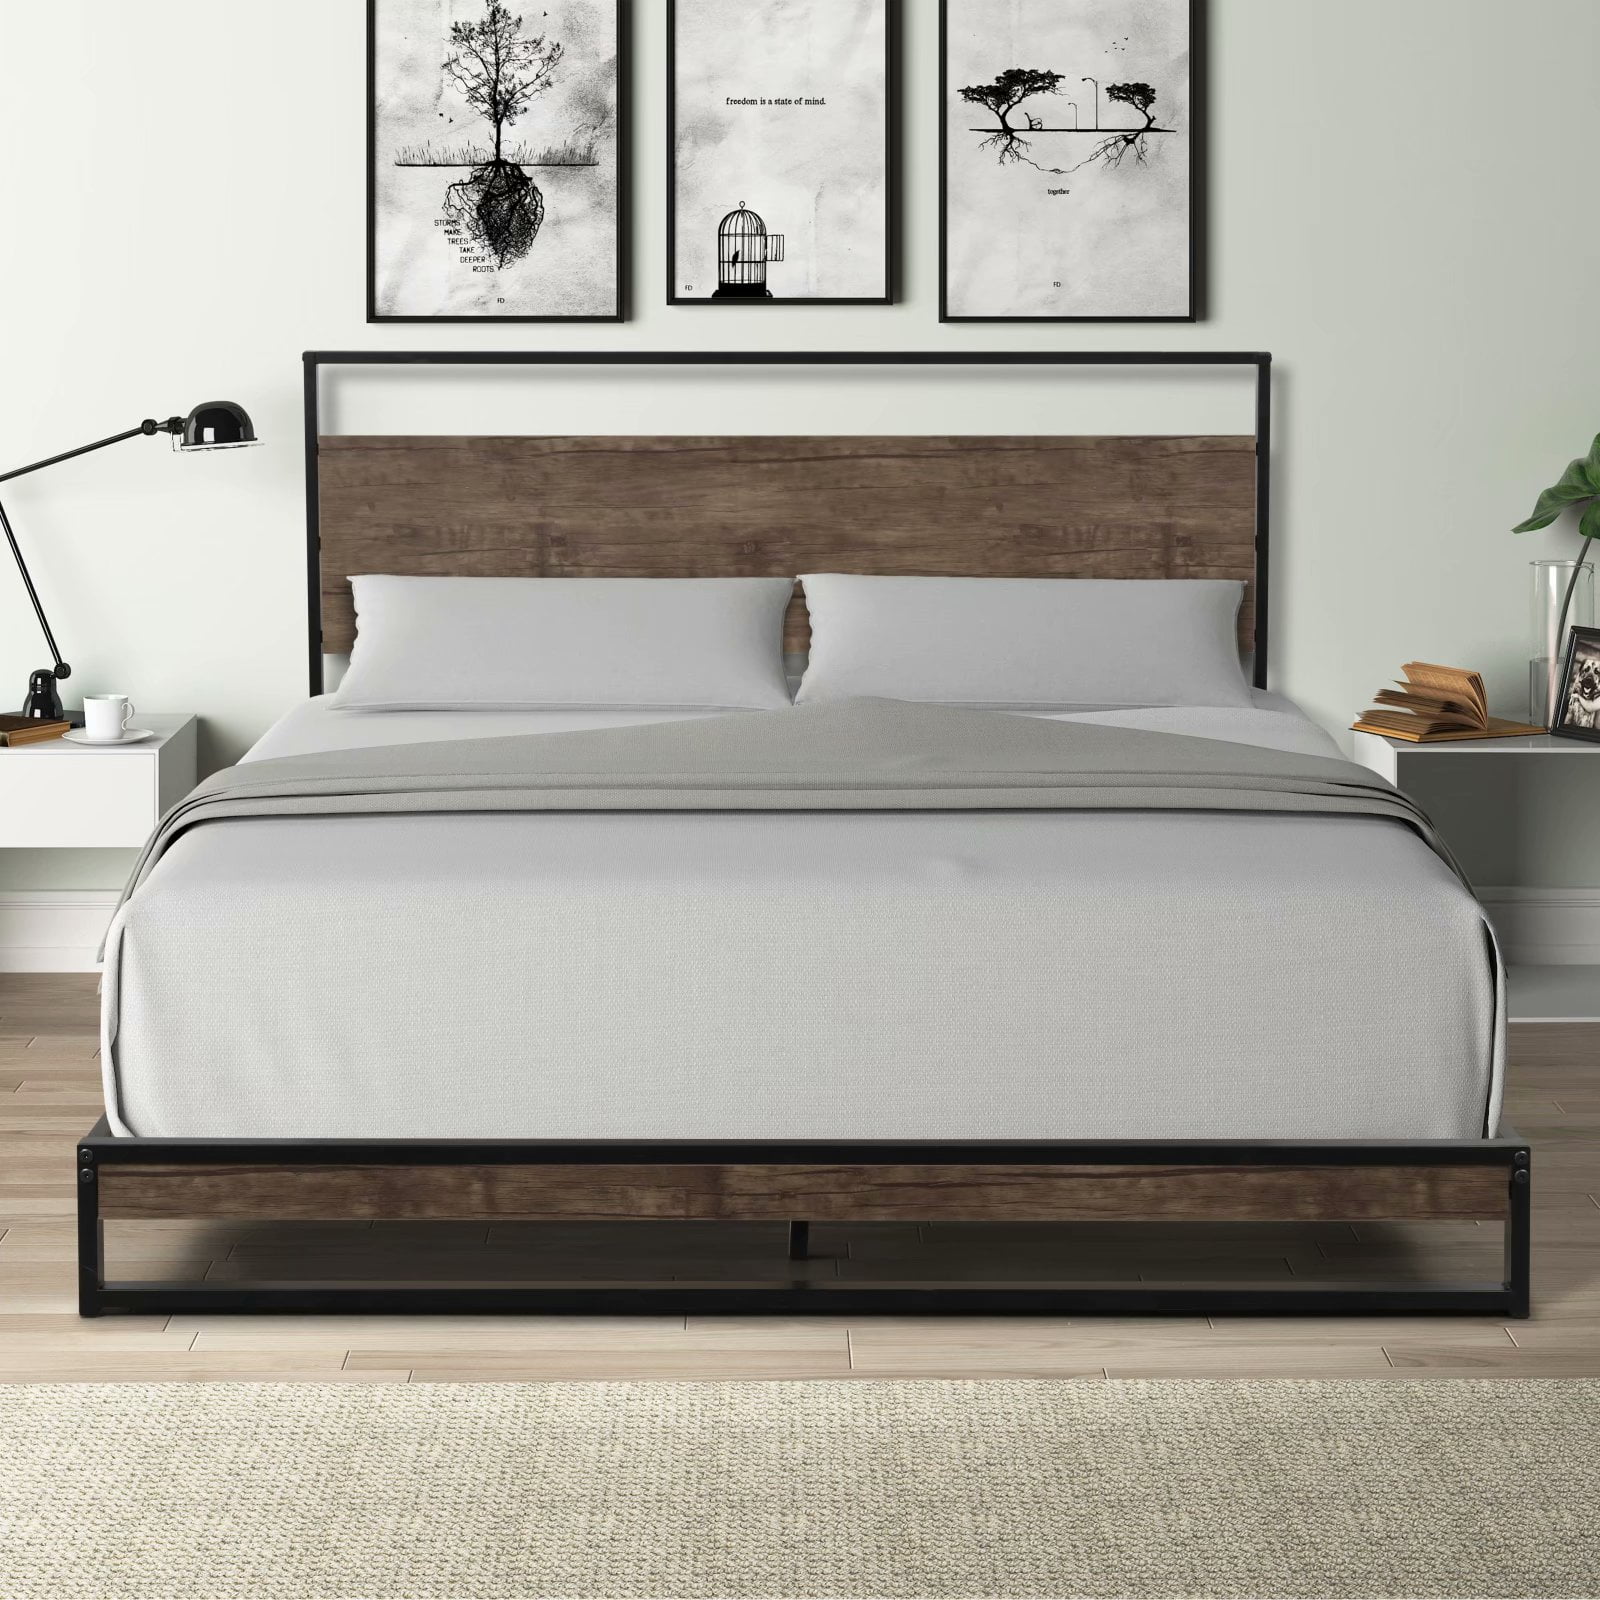 Piscis Metal Bed Frame Queen Size, Industrial Platform Bed with Wooden Headboard Footboard